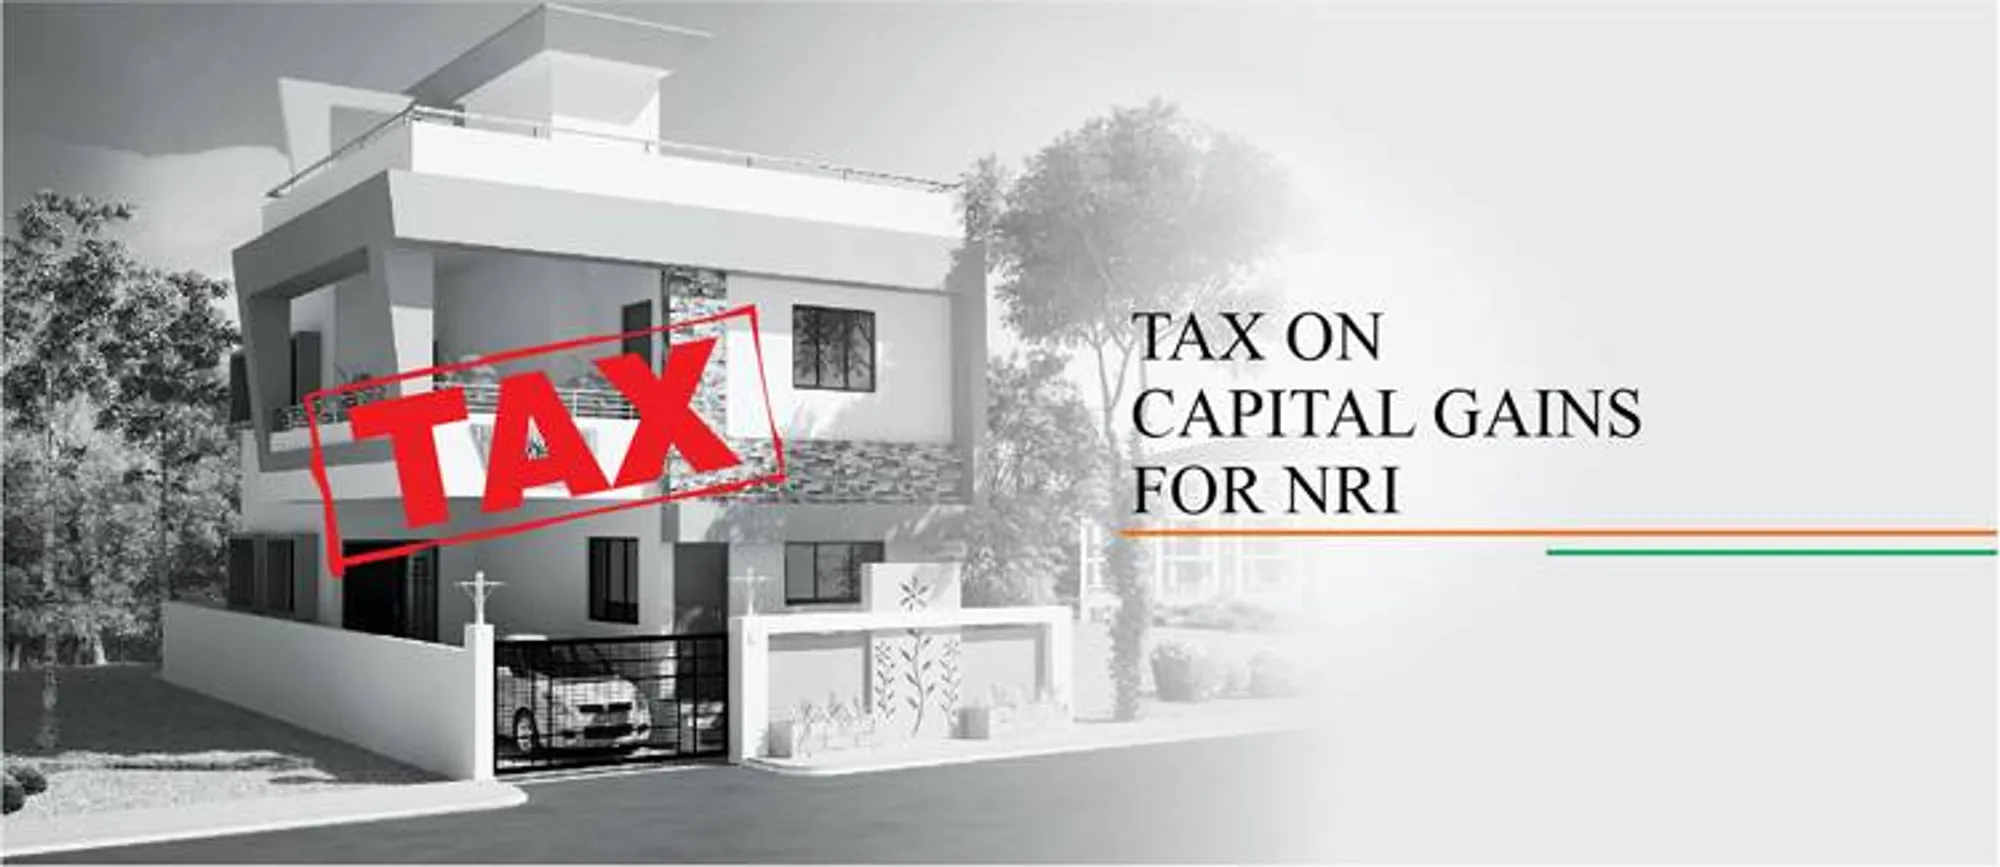 Tax on capital gains